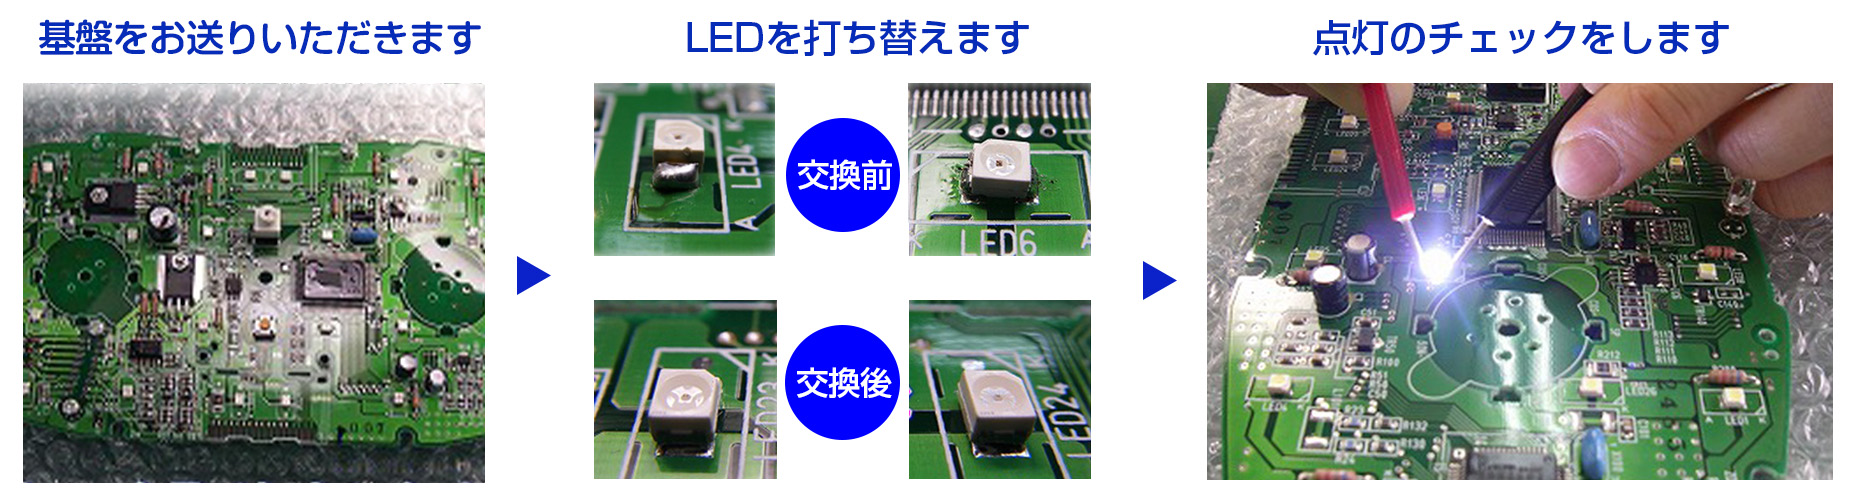 LED交換作業